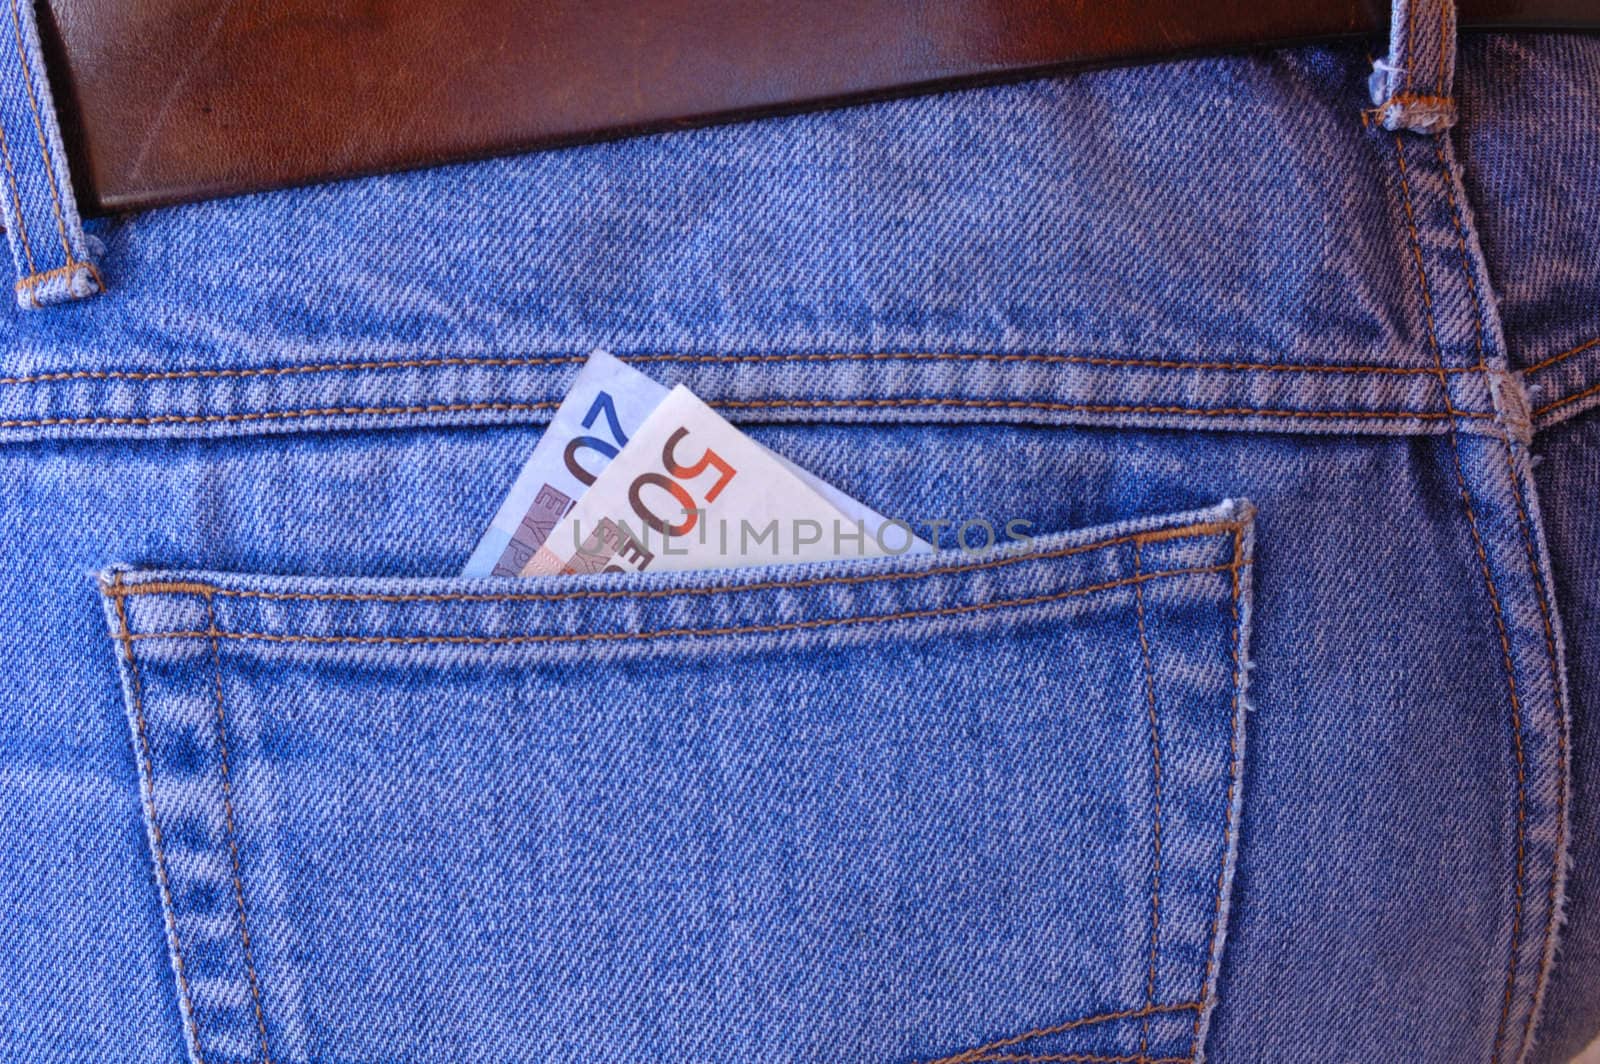 Pickpocket's delight - Euros by Bateleur